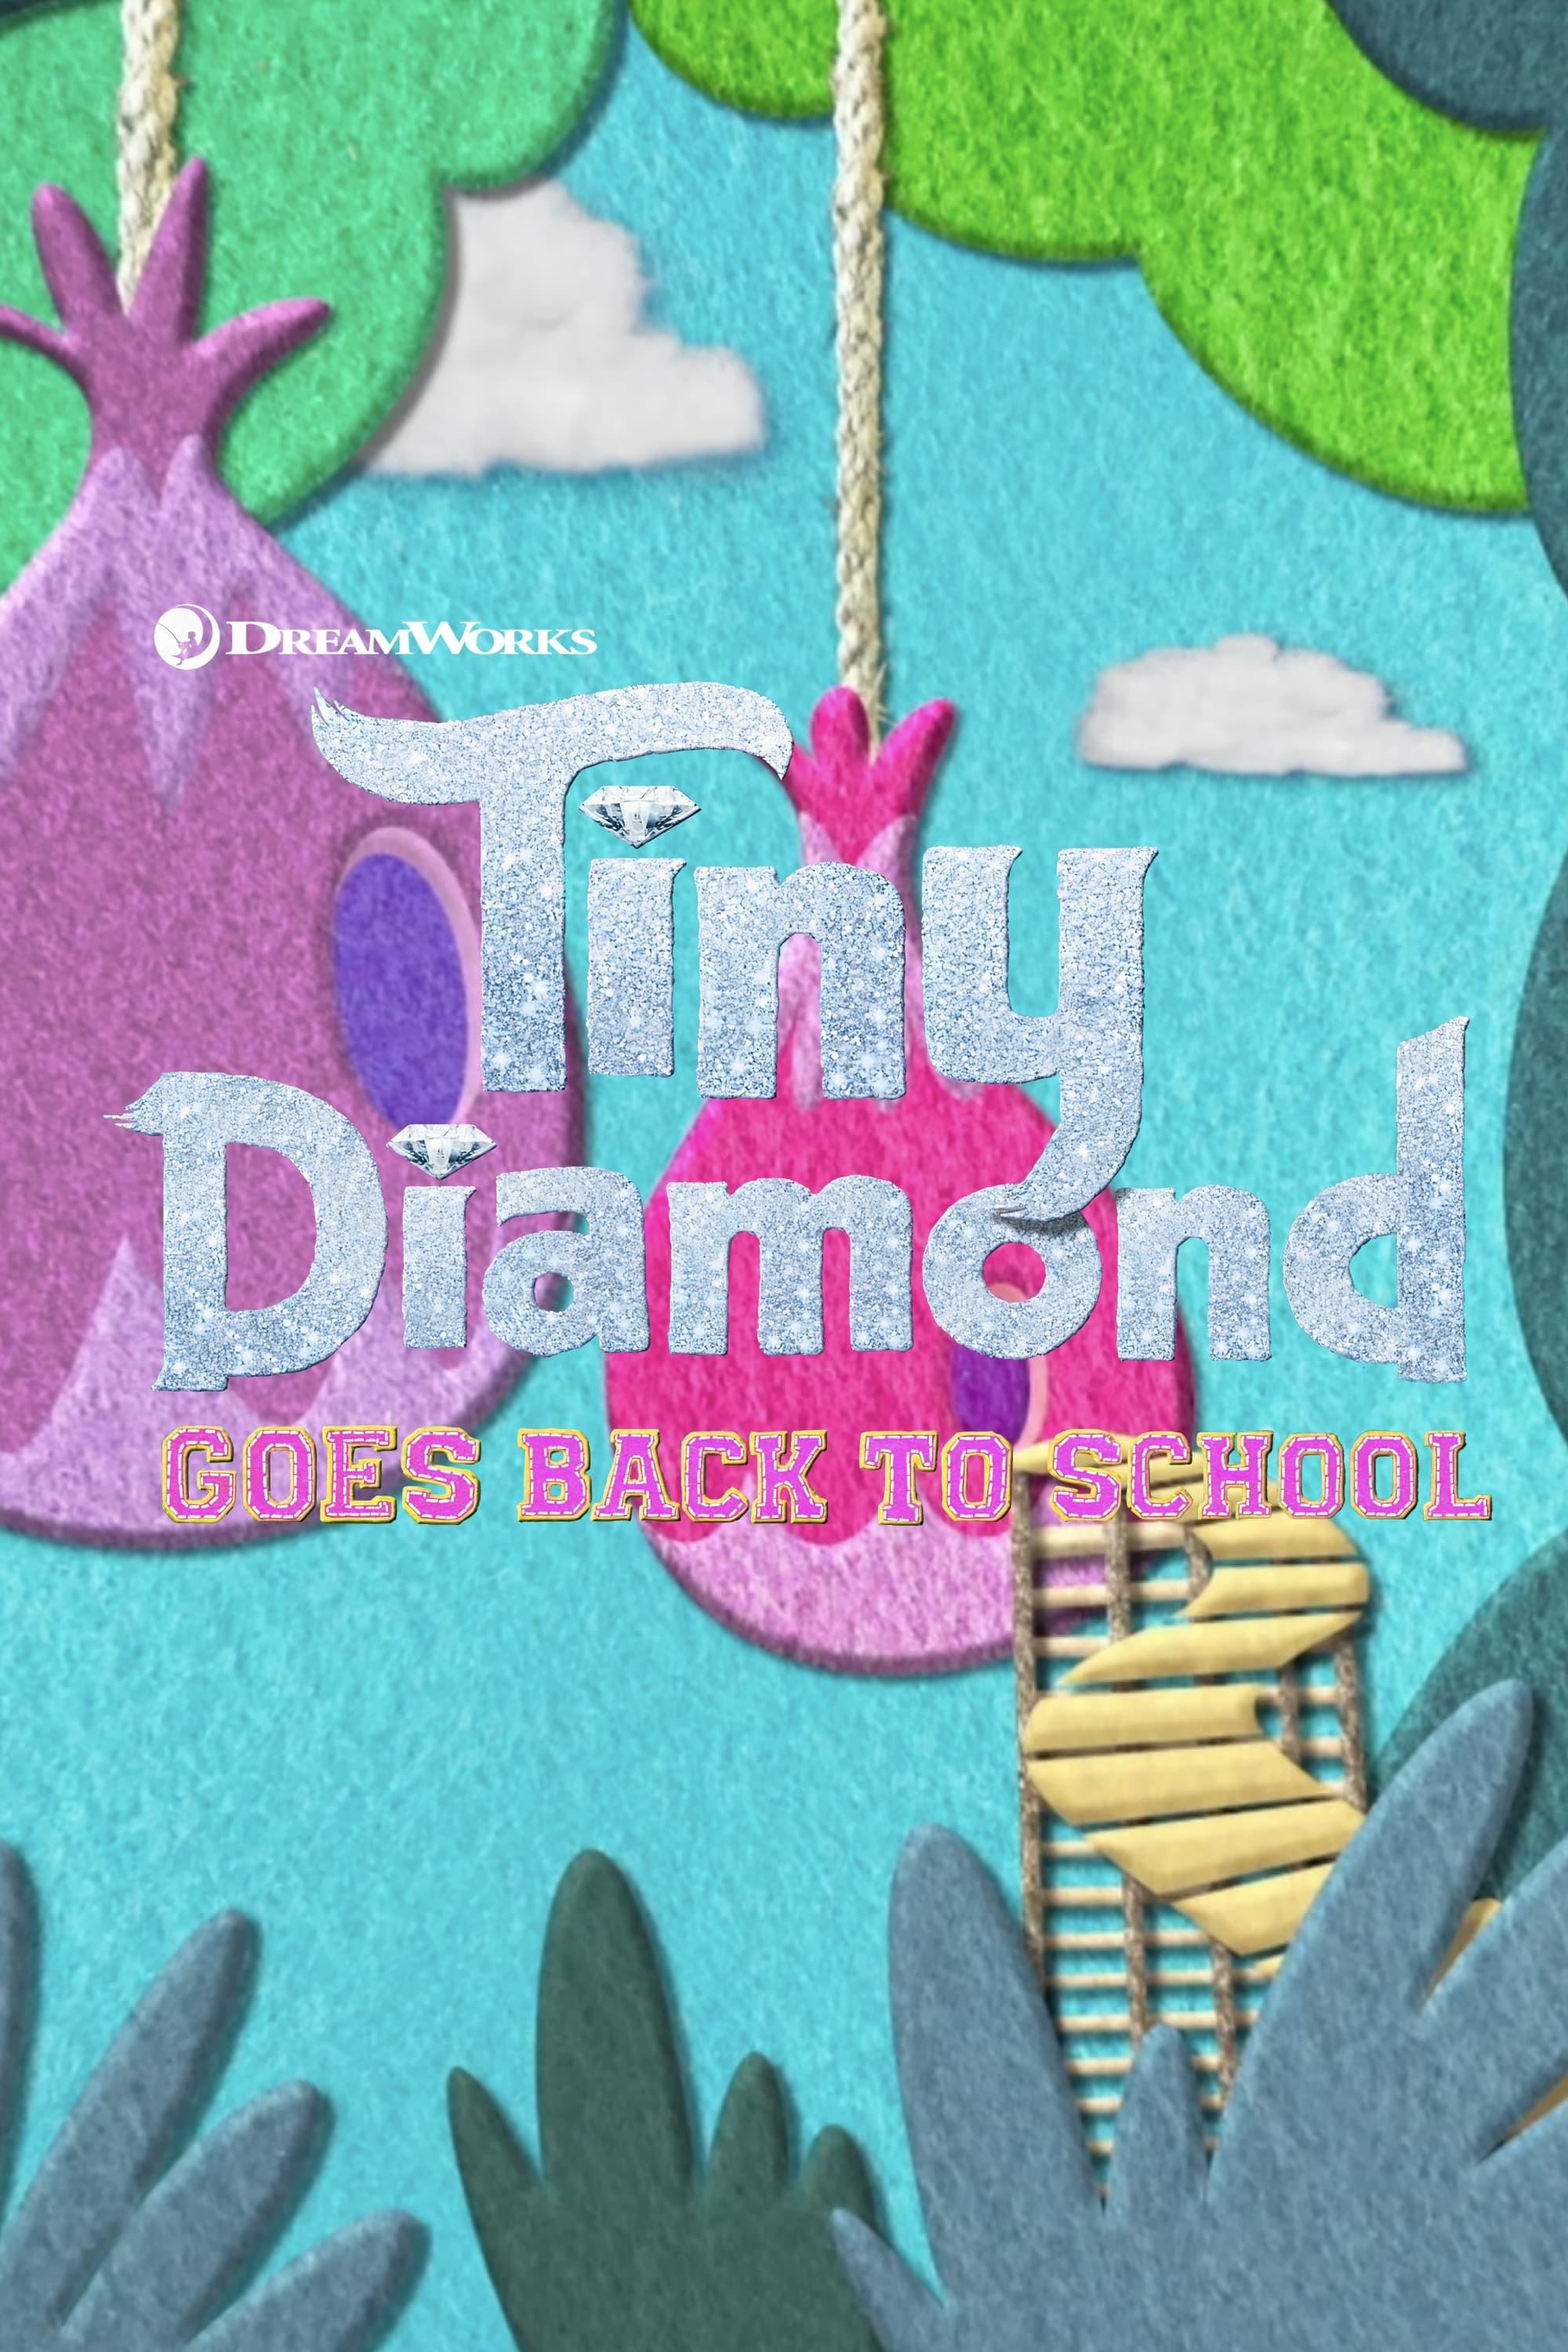 Trolls: Tiny Diamond Goes Back to School poster